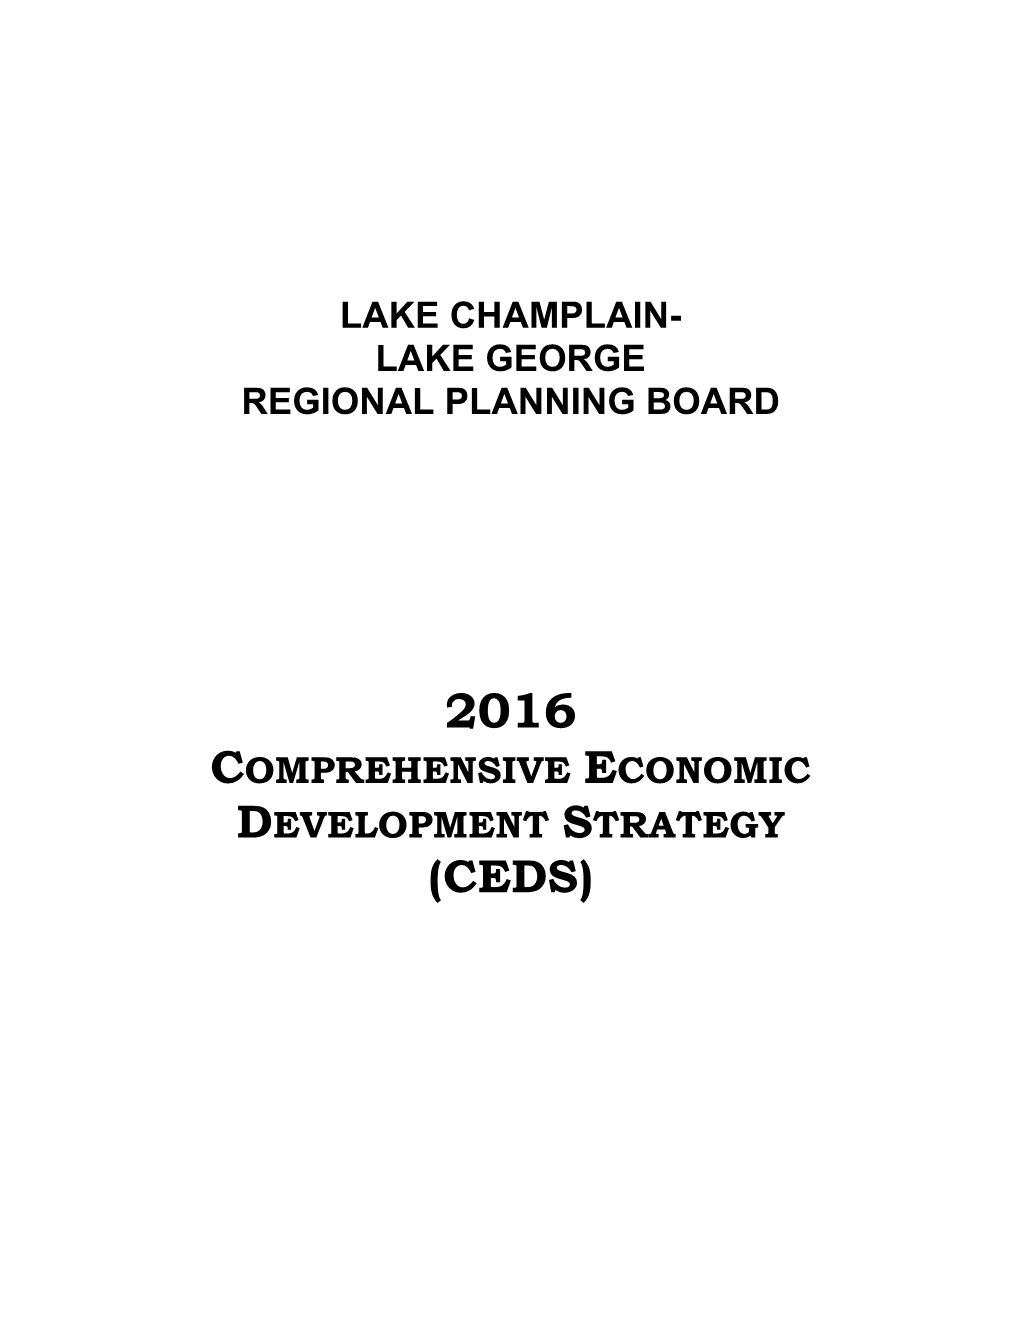 Lake Champlain- Lake George Regional Planning Board